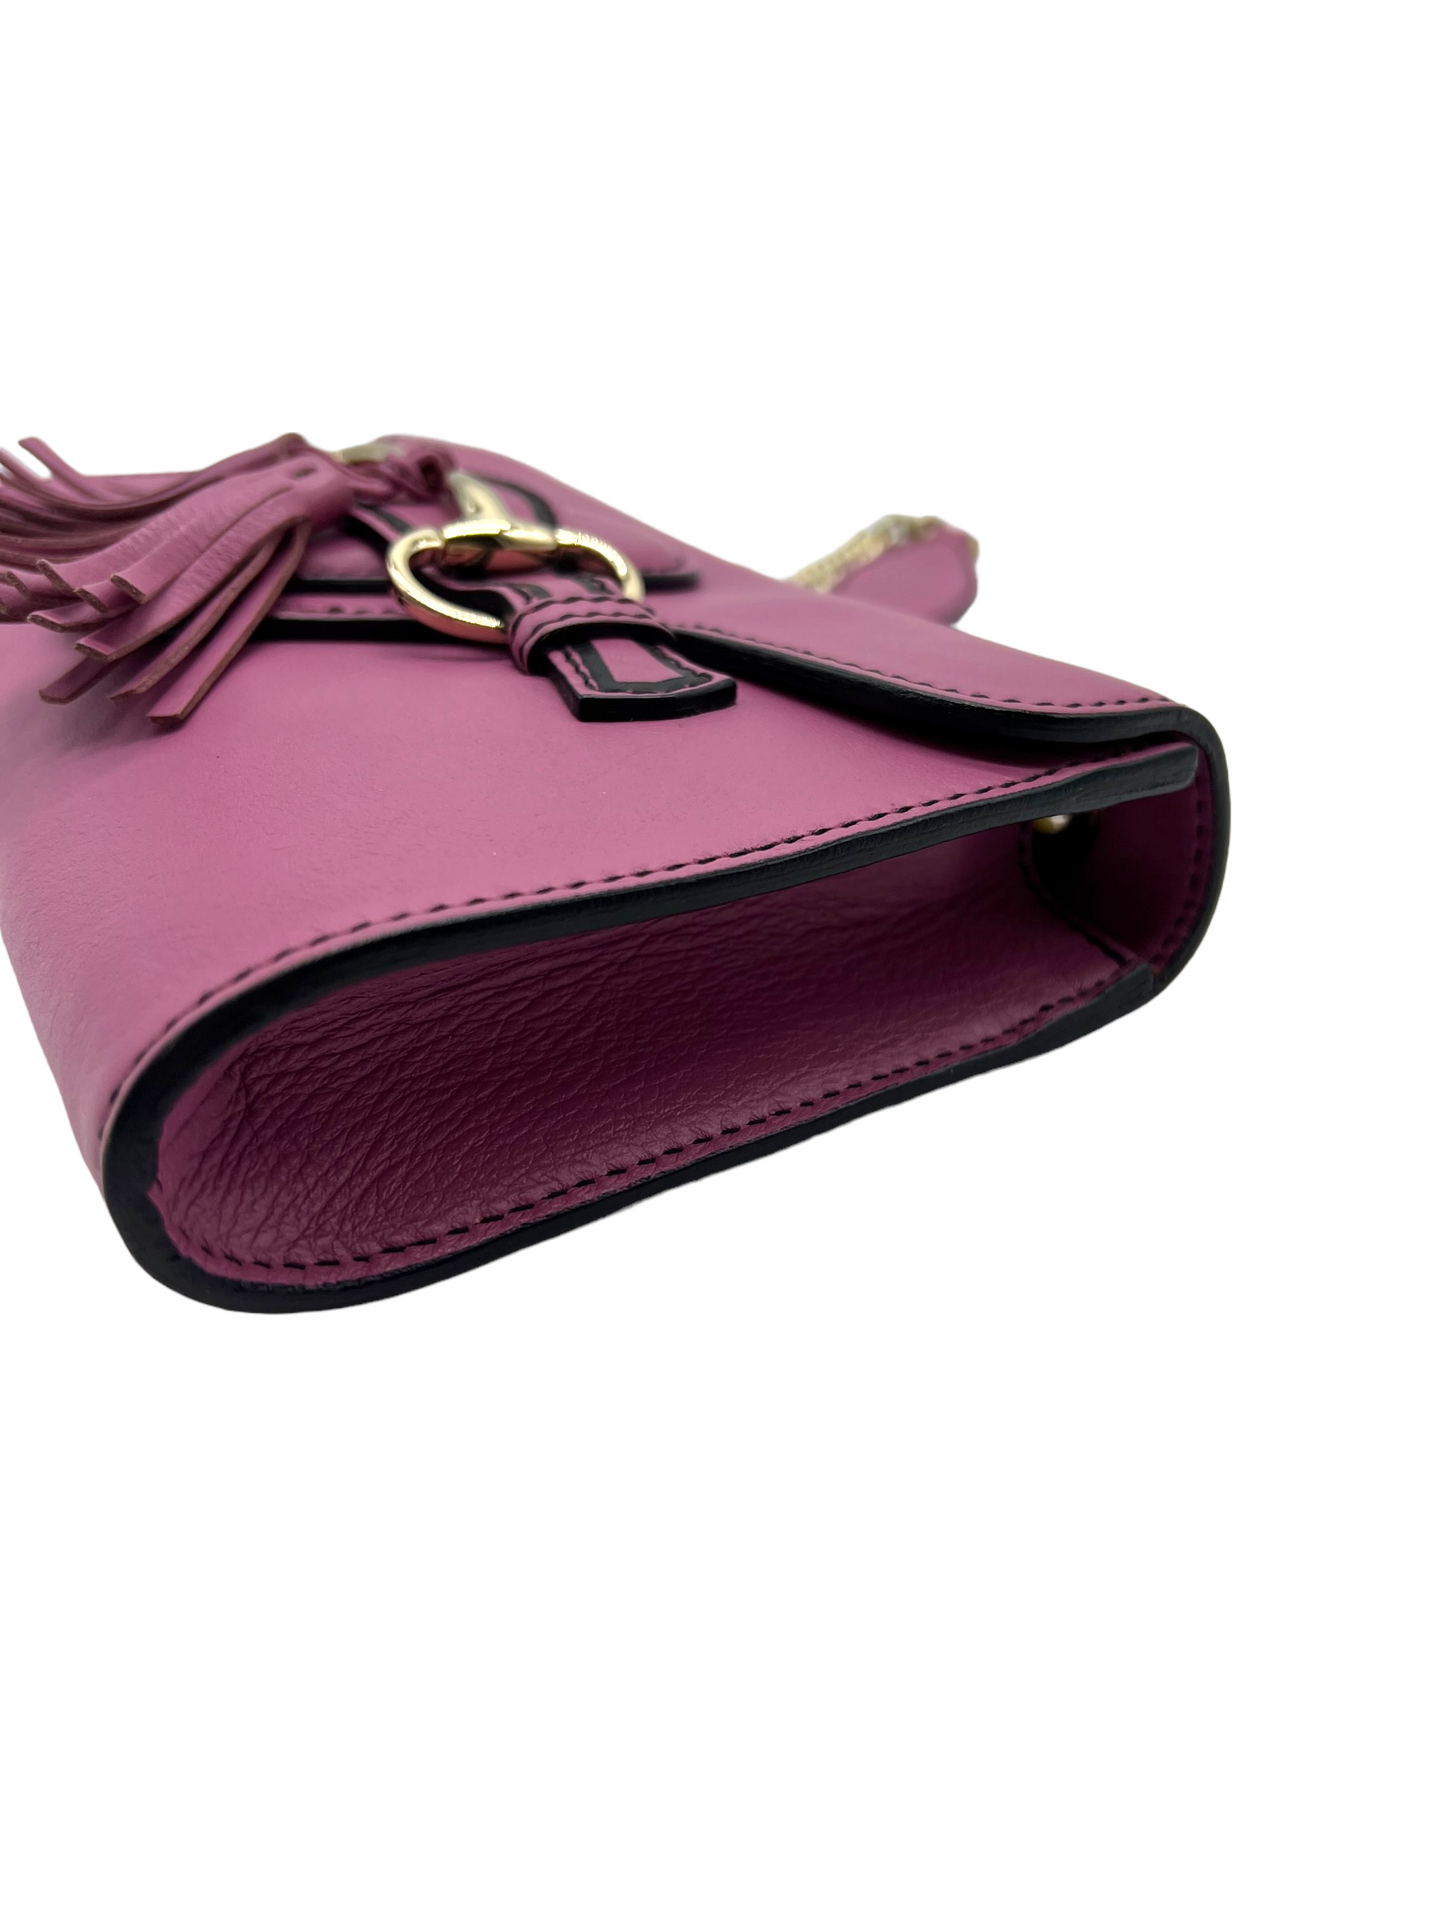 Gucci Rose Pink Leather Emily Handbag